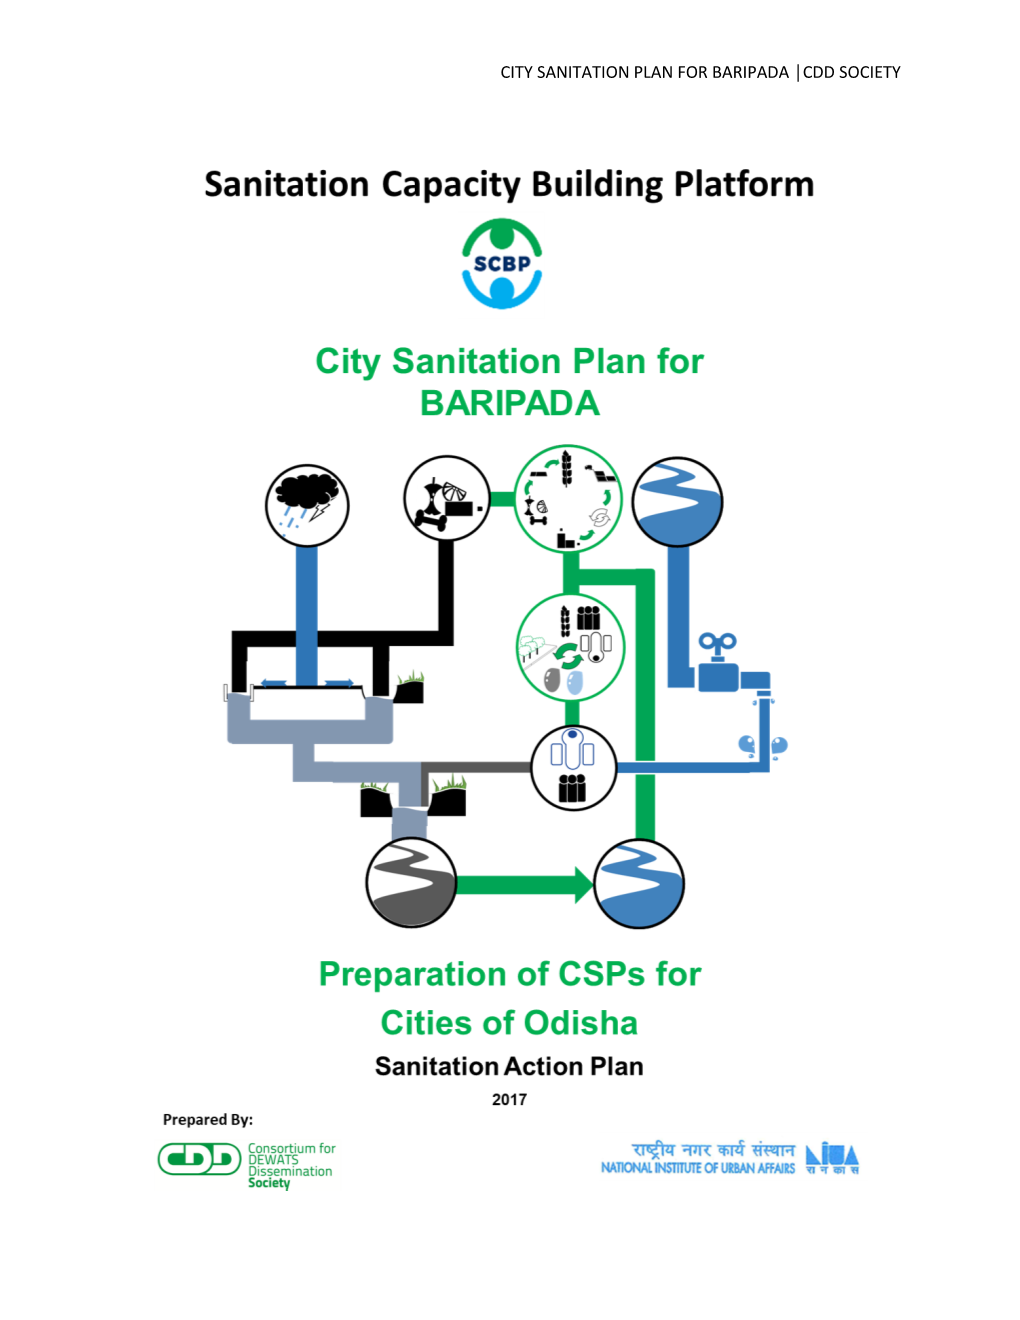 City Sanitation Plan for Baripada Cdd Society